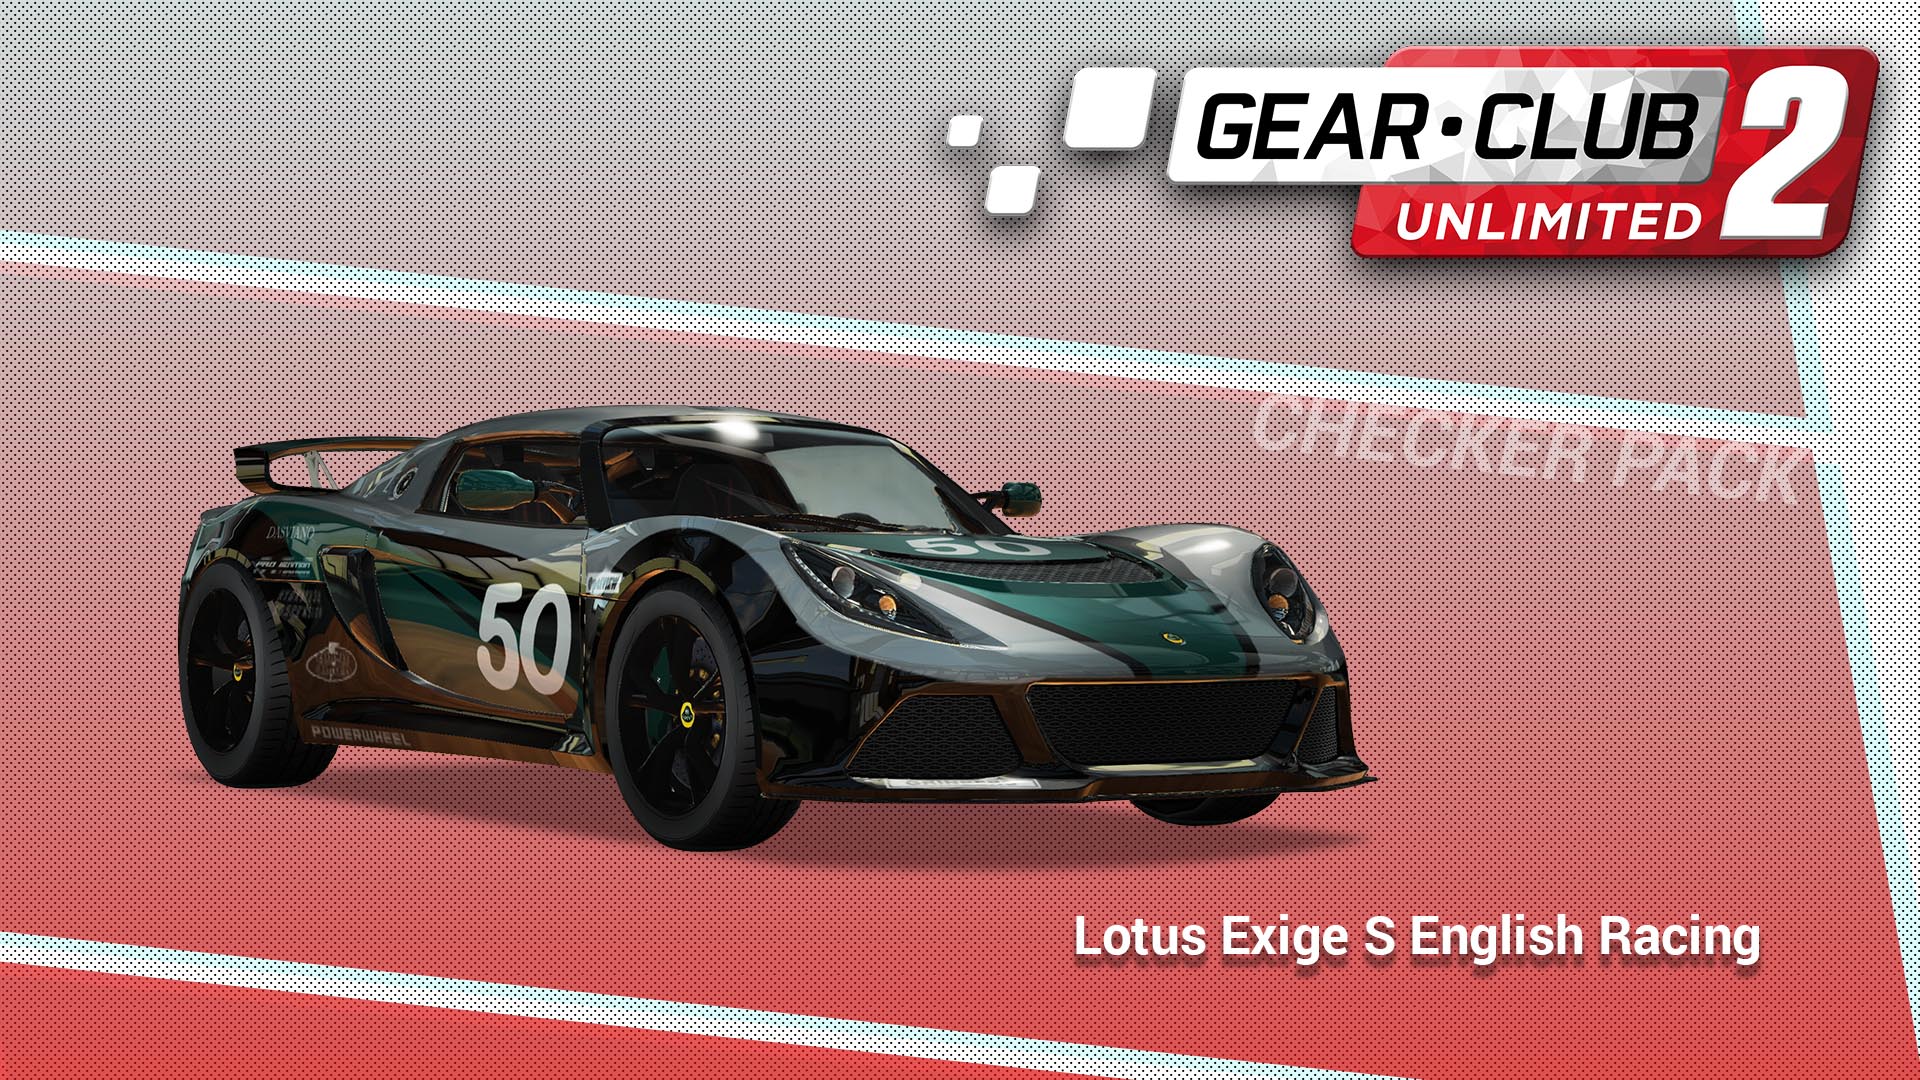 Lotus Exige S English Racing - Gear.Club Unlimited 2